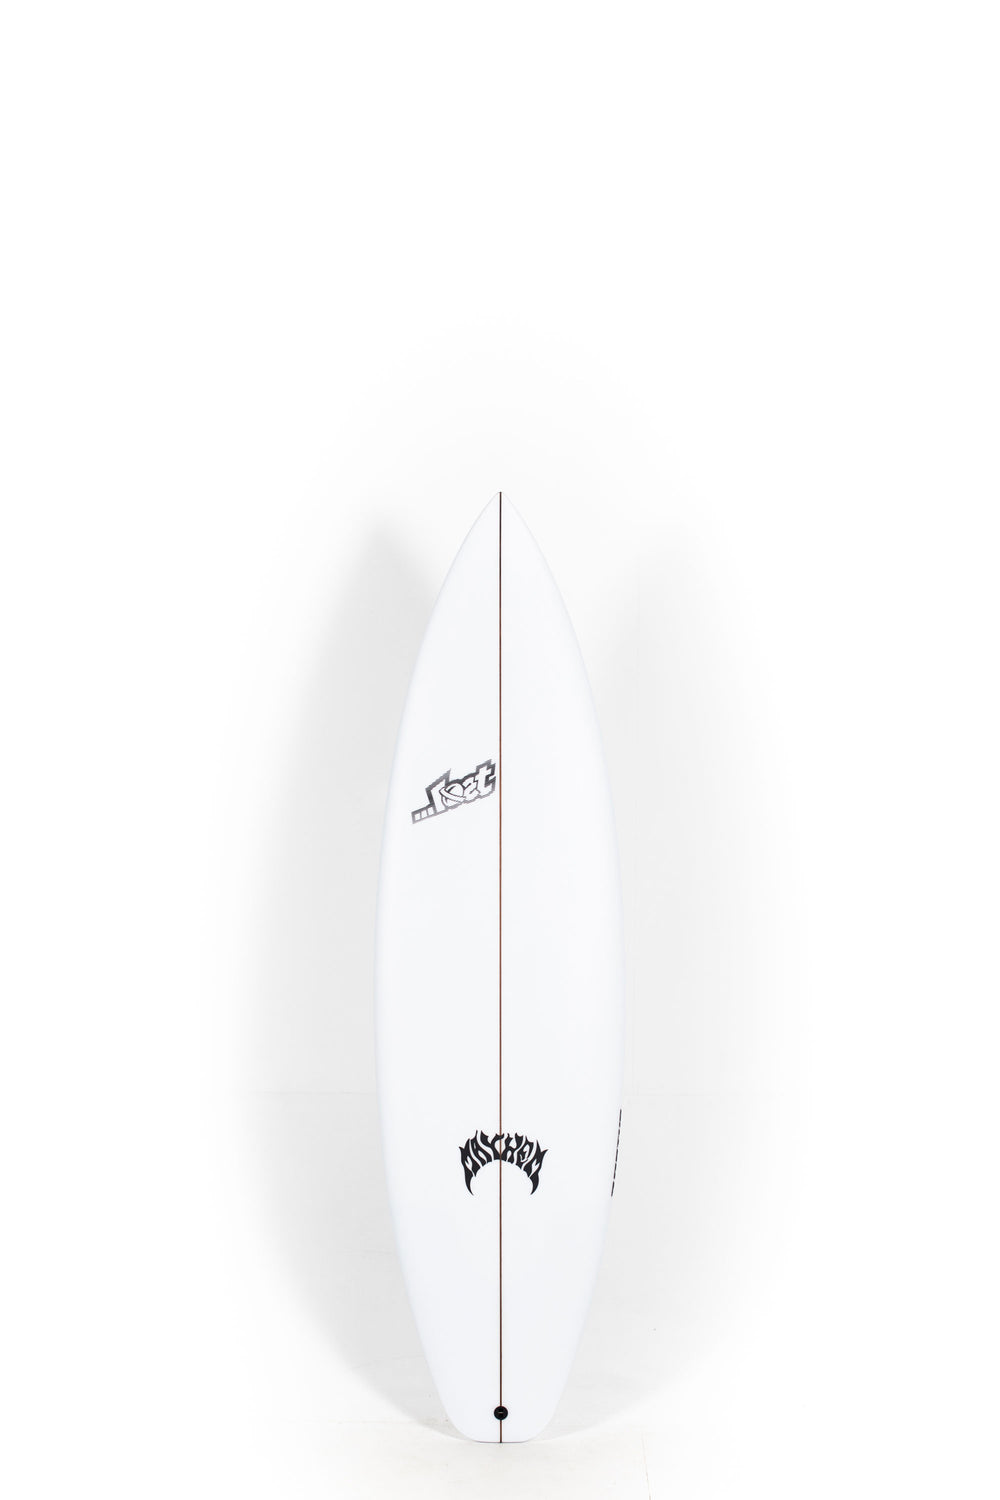 Pukas Surf Shop - Lost Surfboard - 3.0_STUB DRIVER by Matt Biolos - 6’0” x 19.5